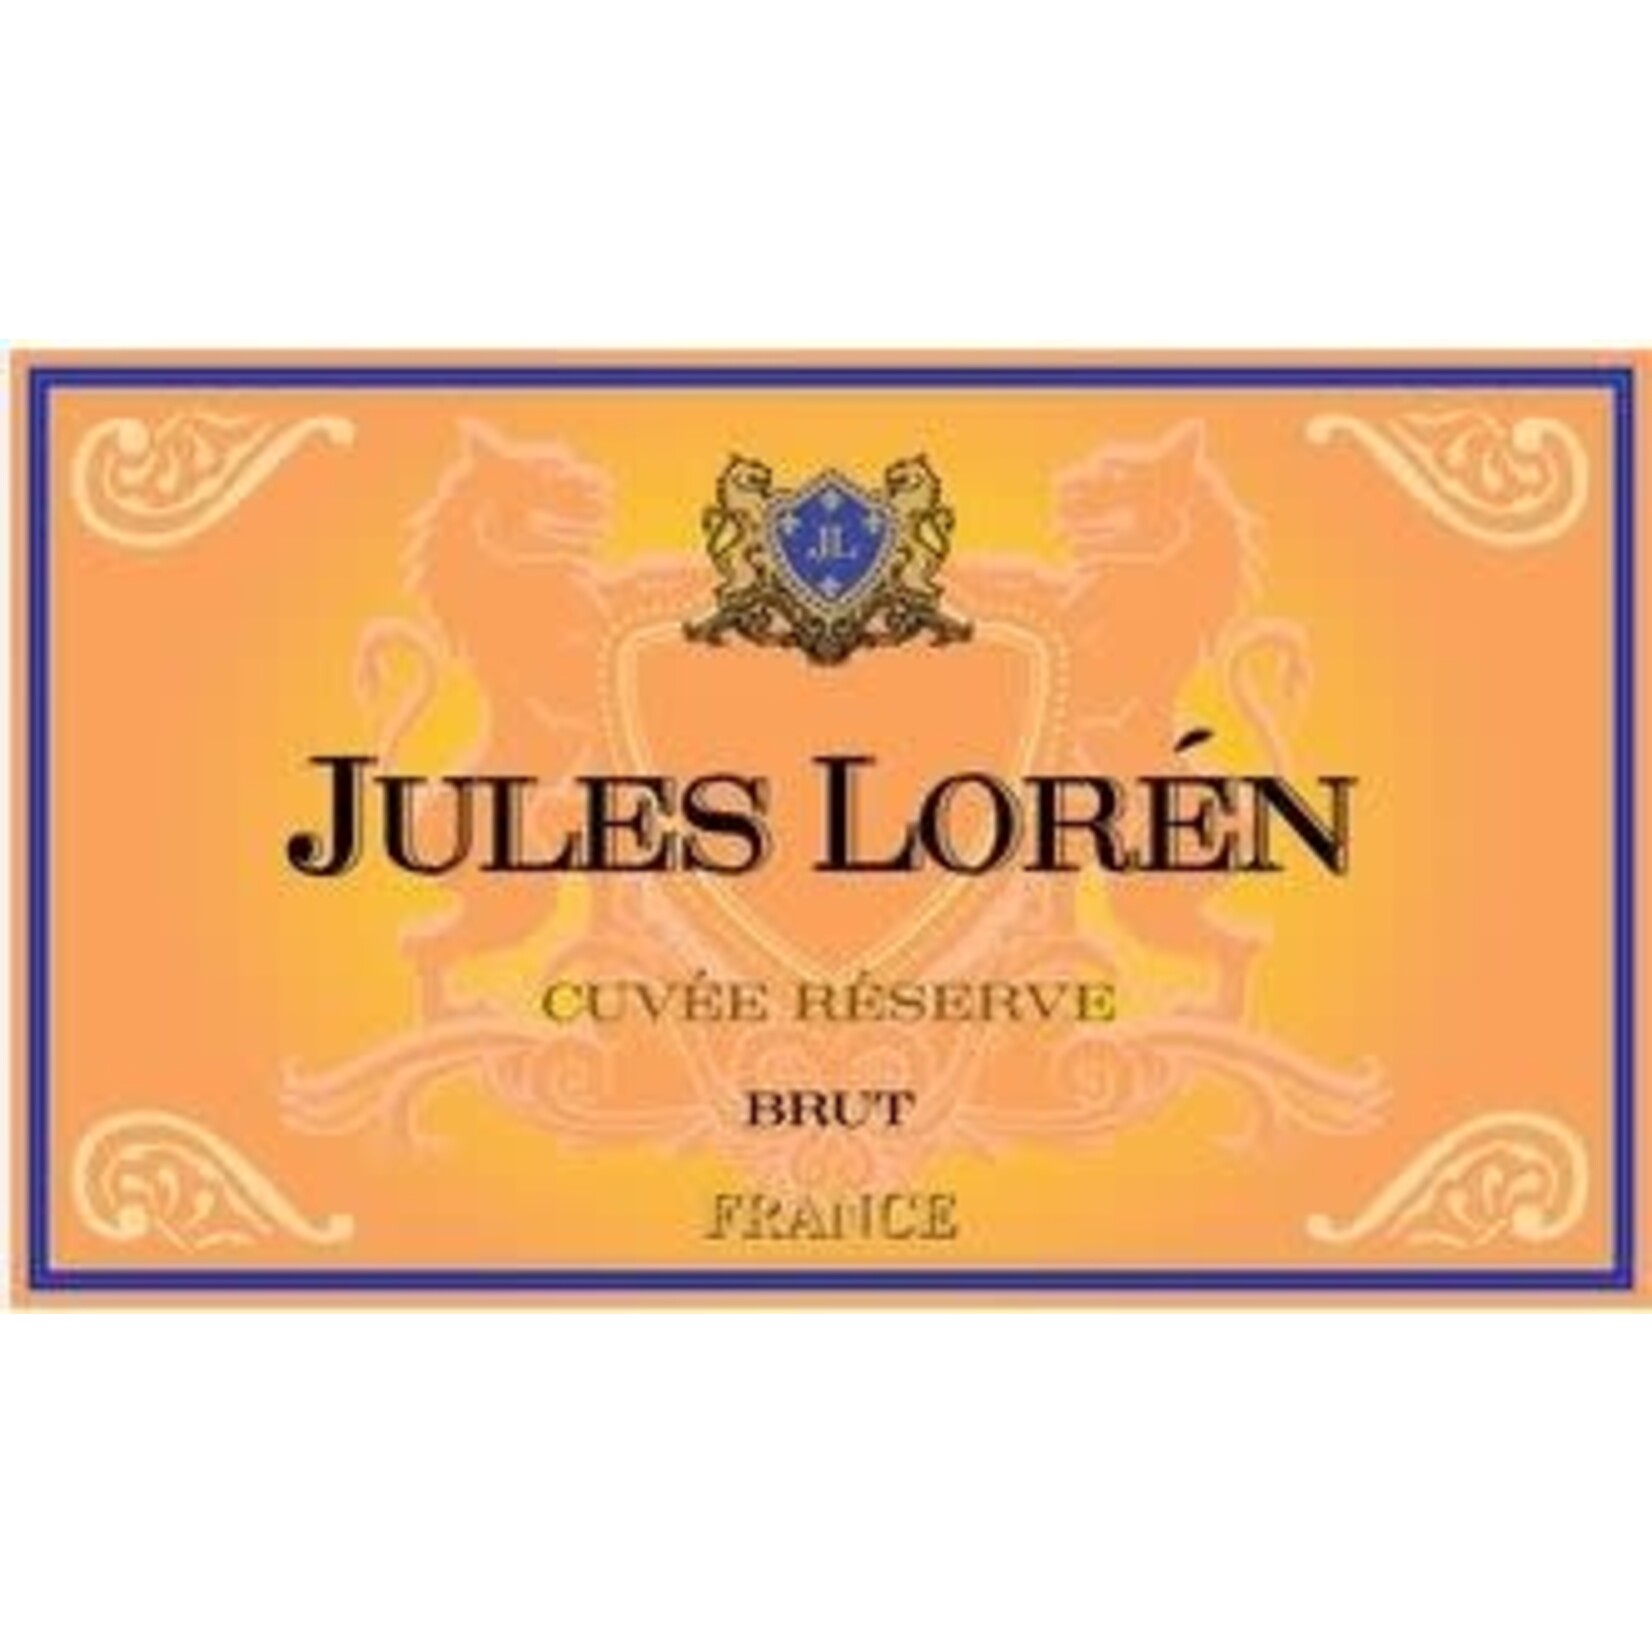 Jules Loren Jules Loren Cuvee Reserve Brut 750 ml France